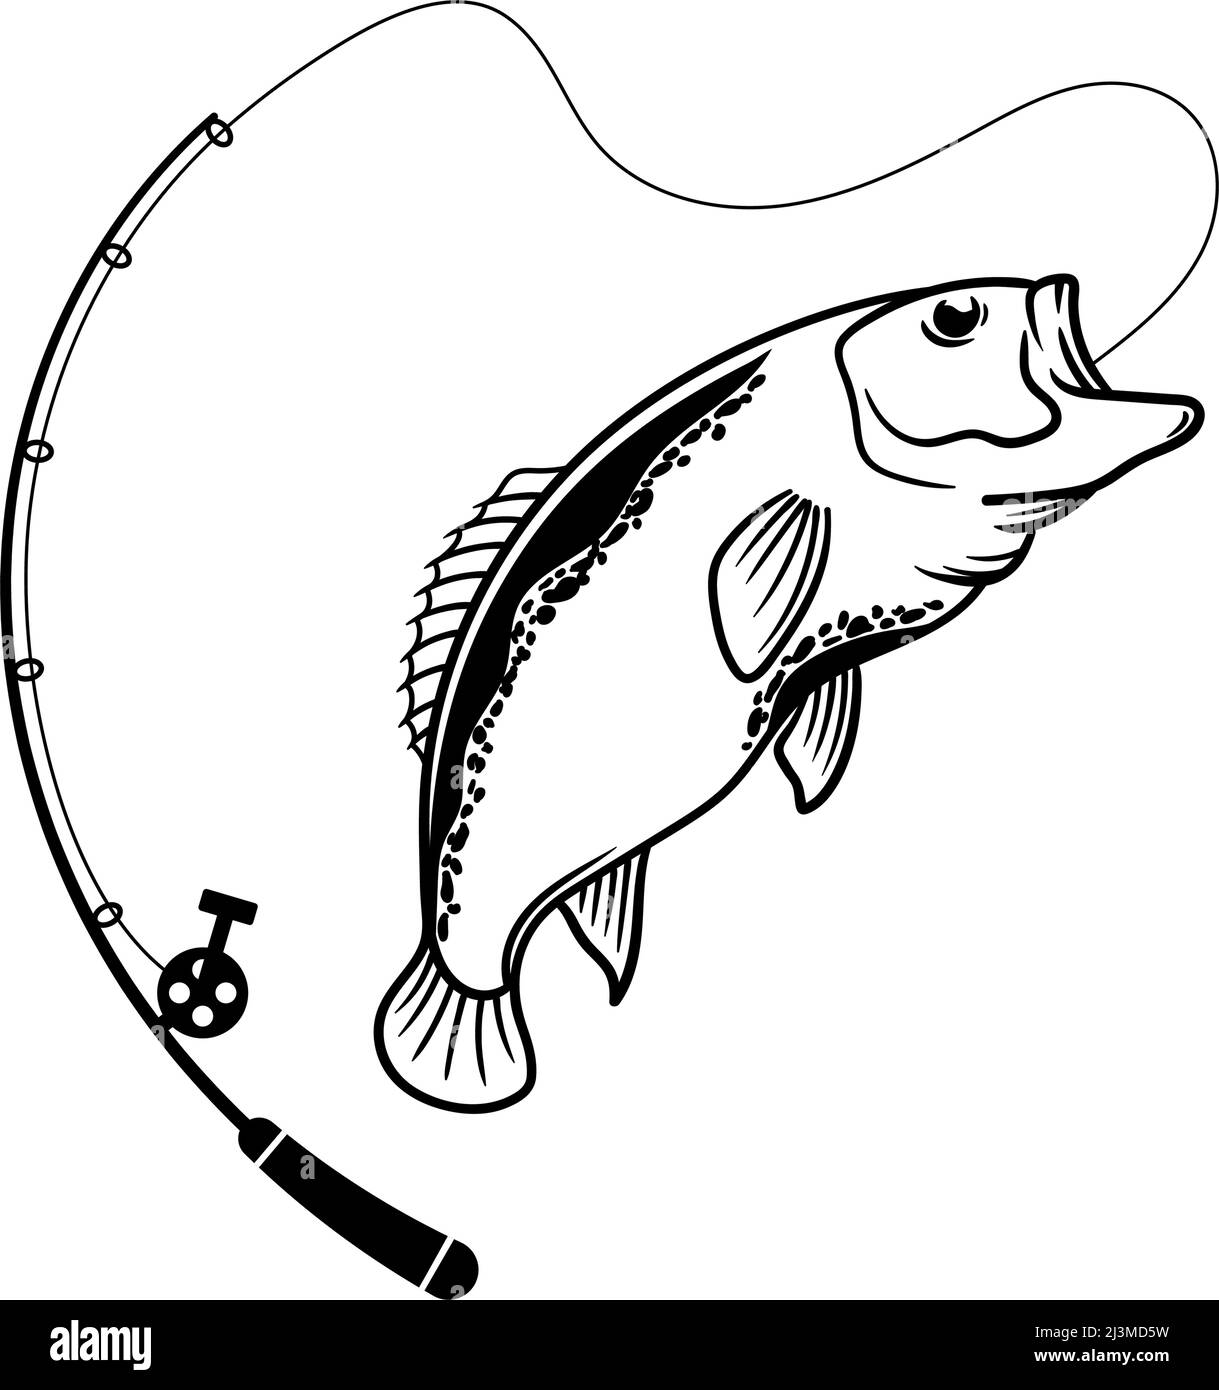 https://c8.alamy.com/comp/2J3MD5W/bass-fishing-line-art-illustration-icon-design-template-vector-2J3MD5W.jpg